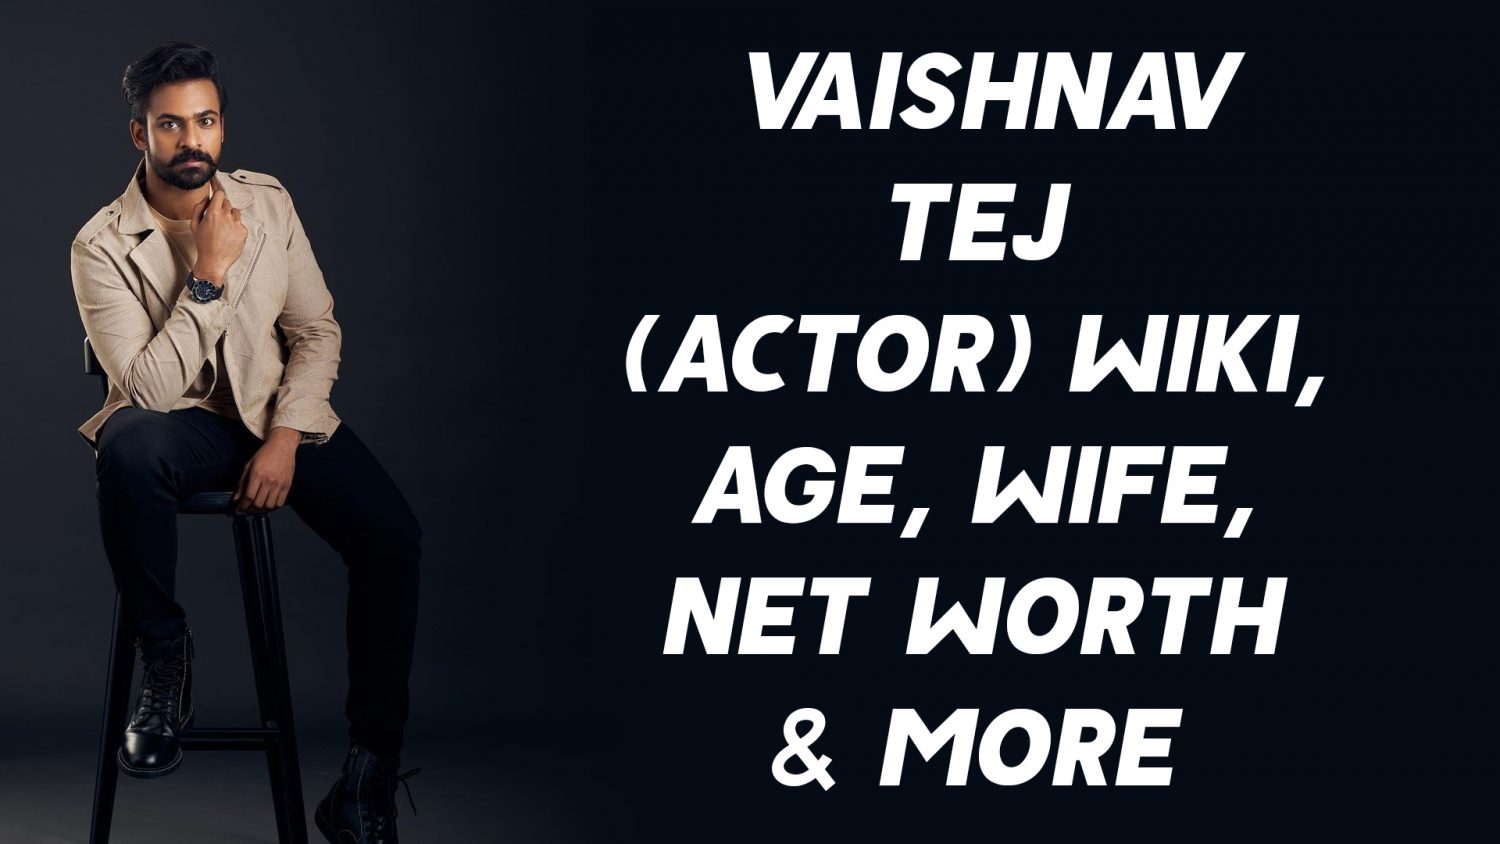 Vaishnav Tej (Actor) Wiki, Age, Wife, Net Worth & More 1